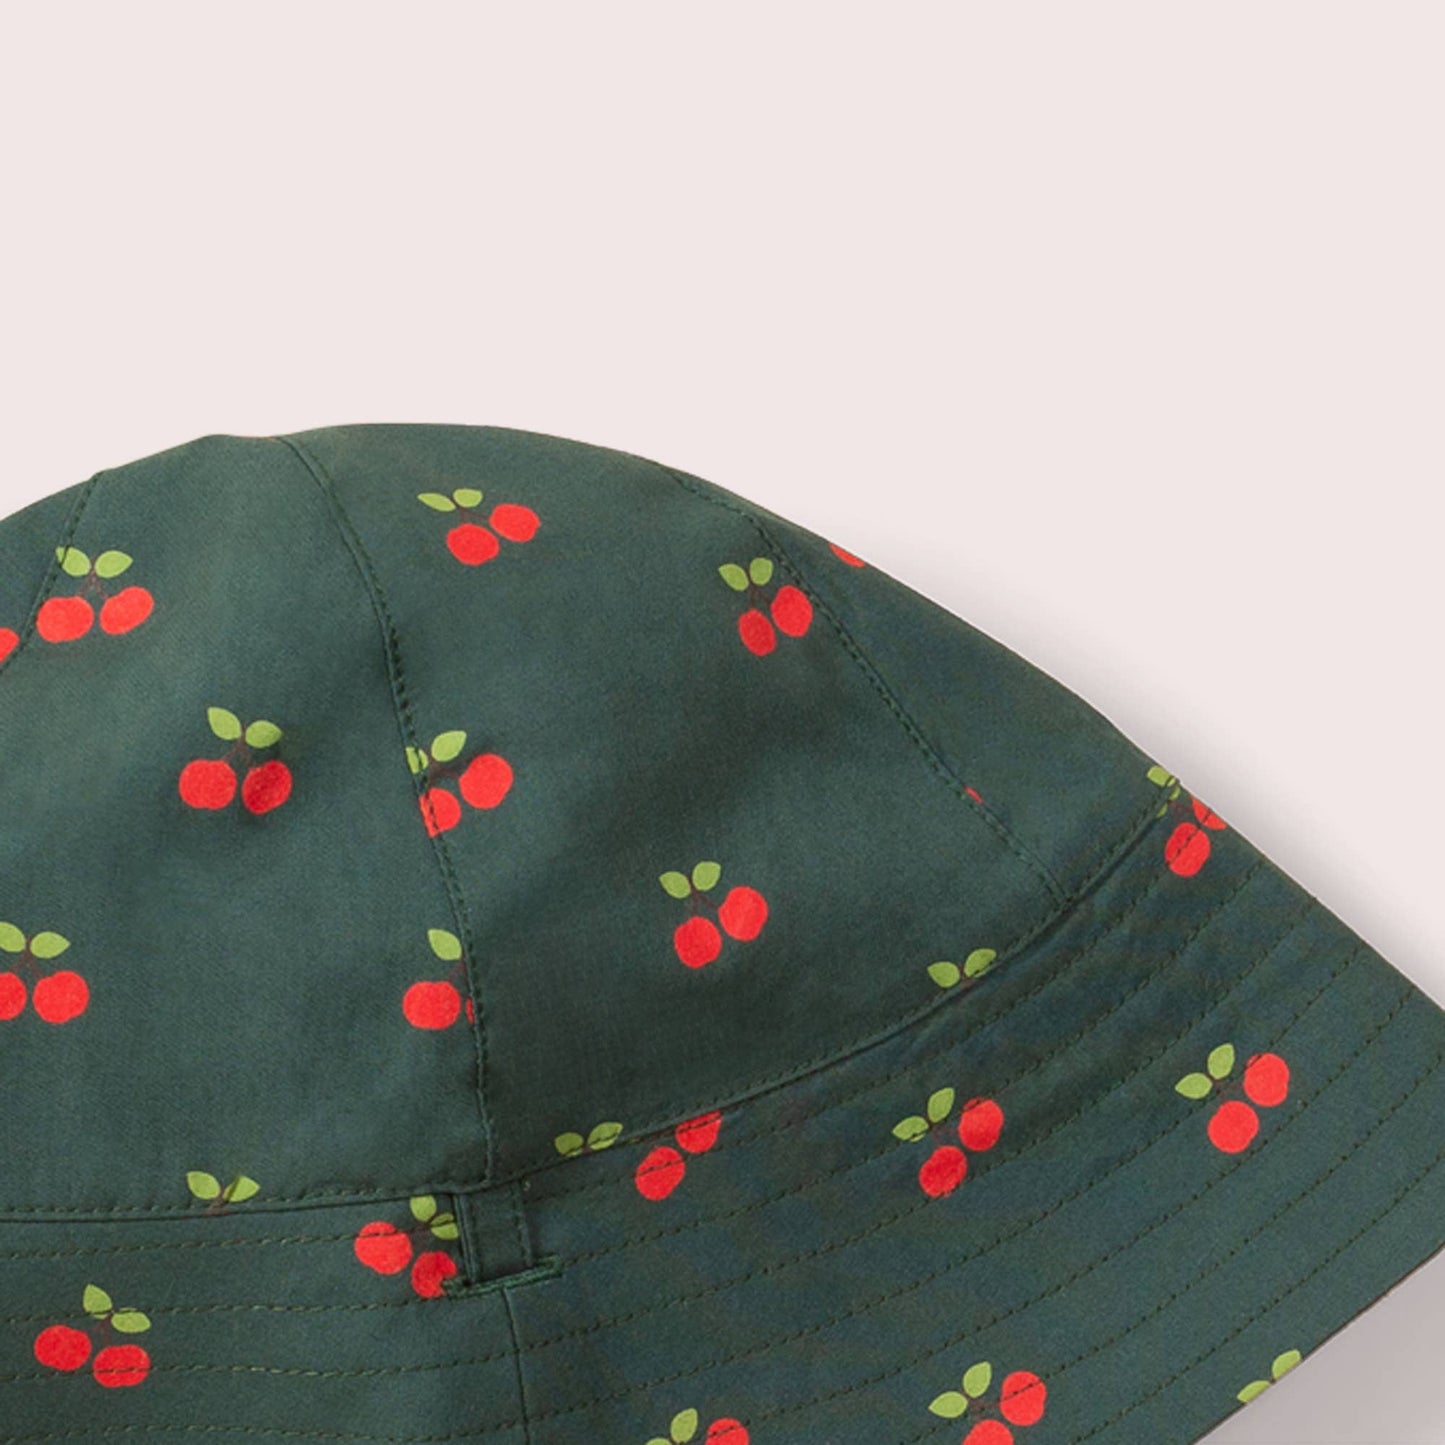 Cherries Reversible Sunhat in Olive brim detail